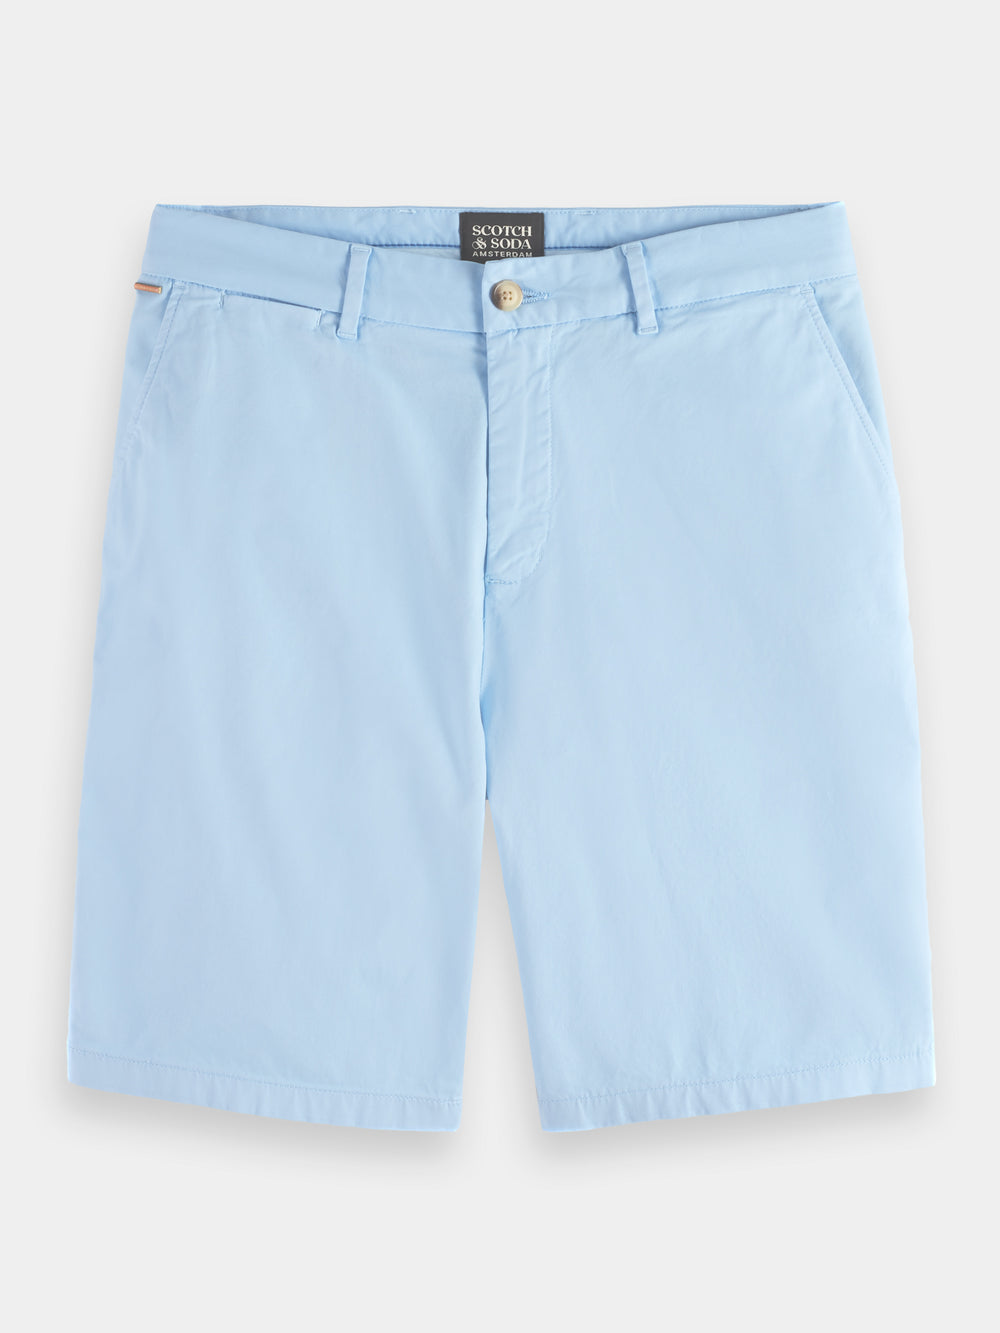 Stuart garment-dyed pima cotton shorts - Scotch & Soda NZ